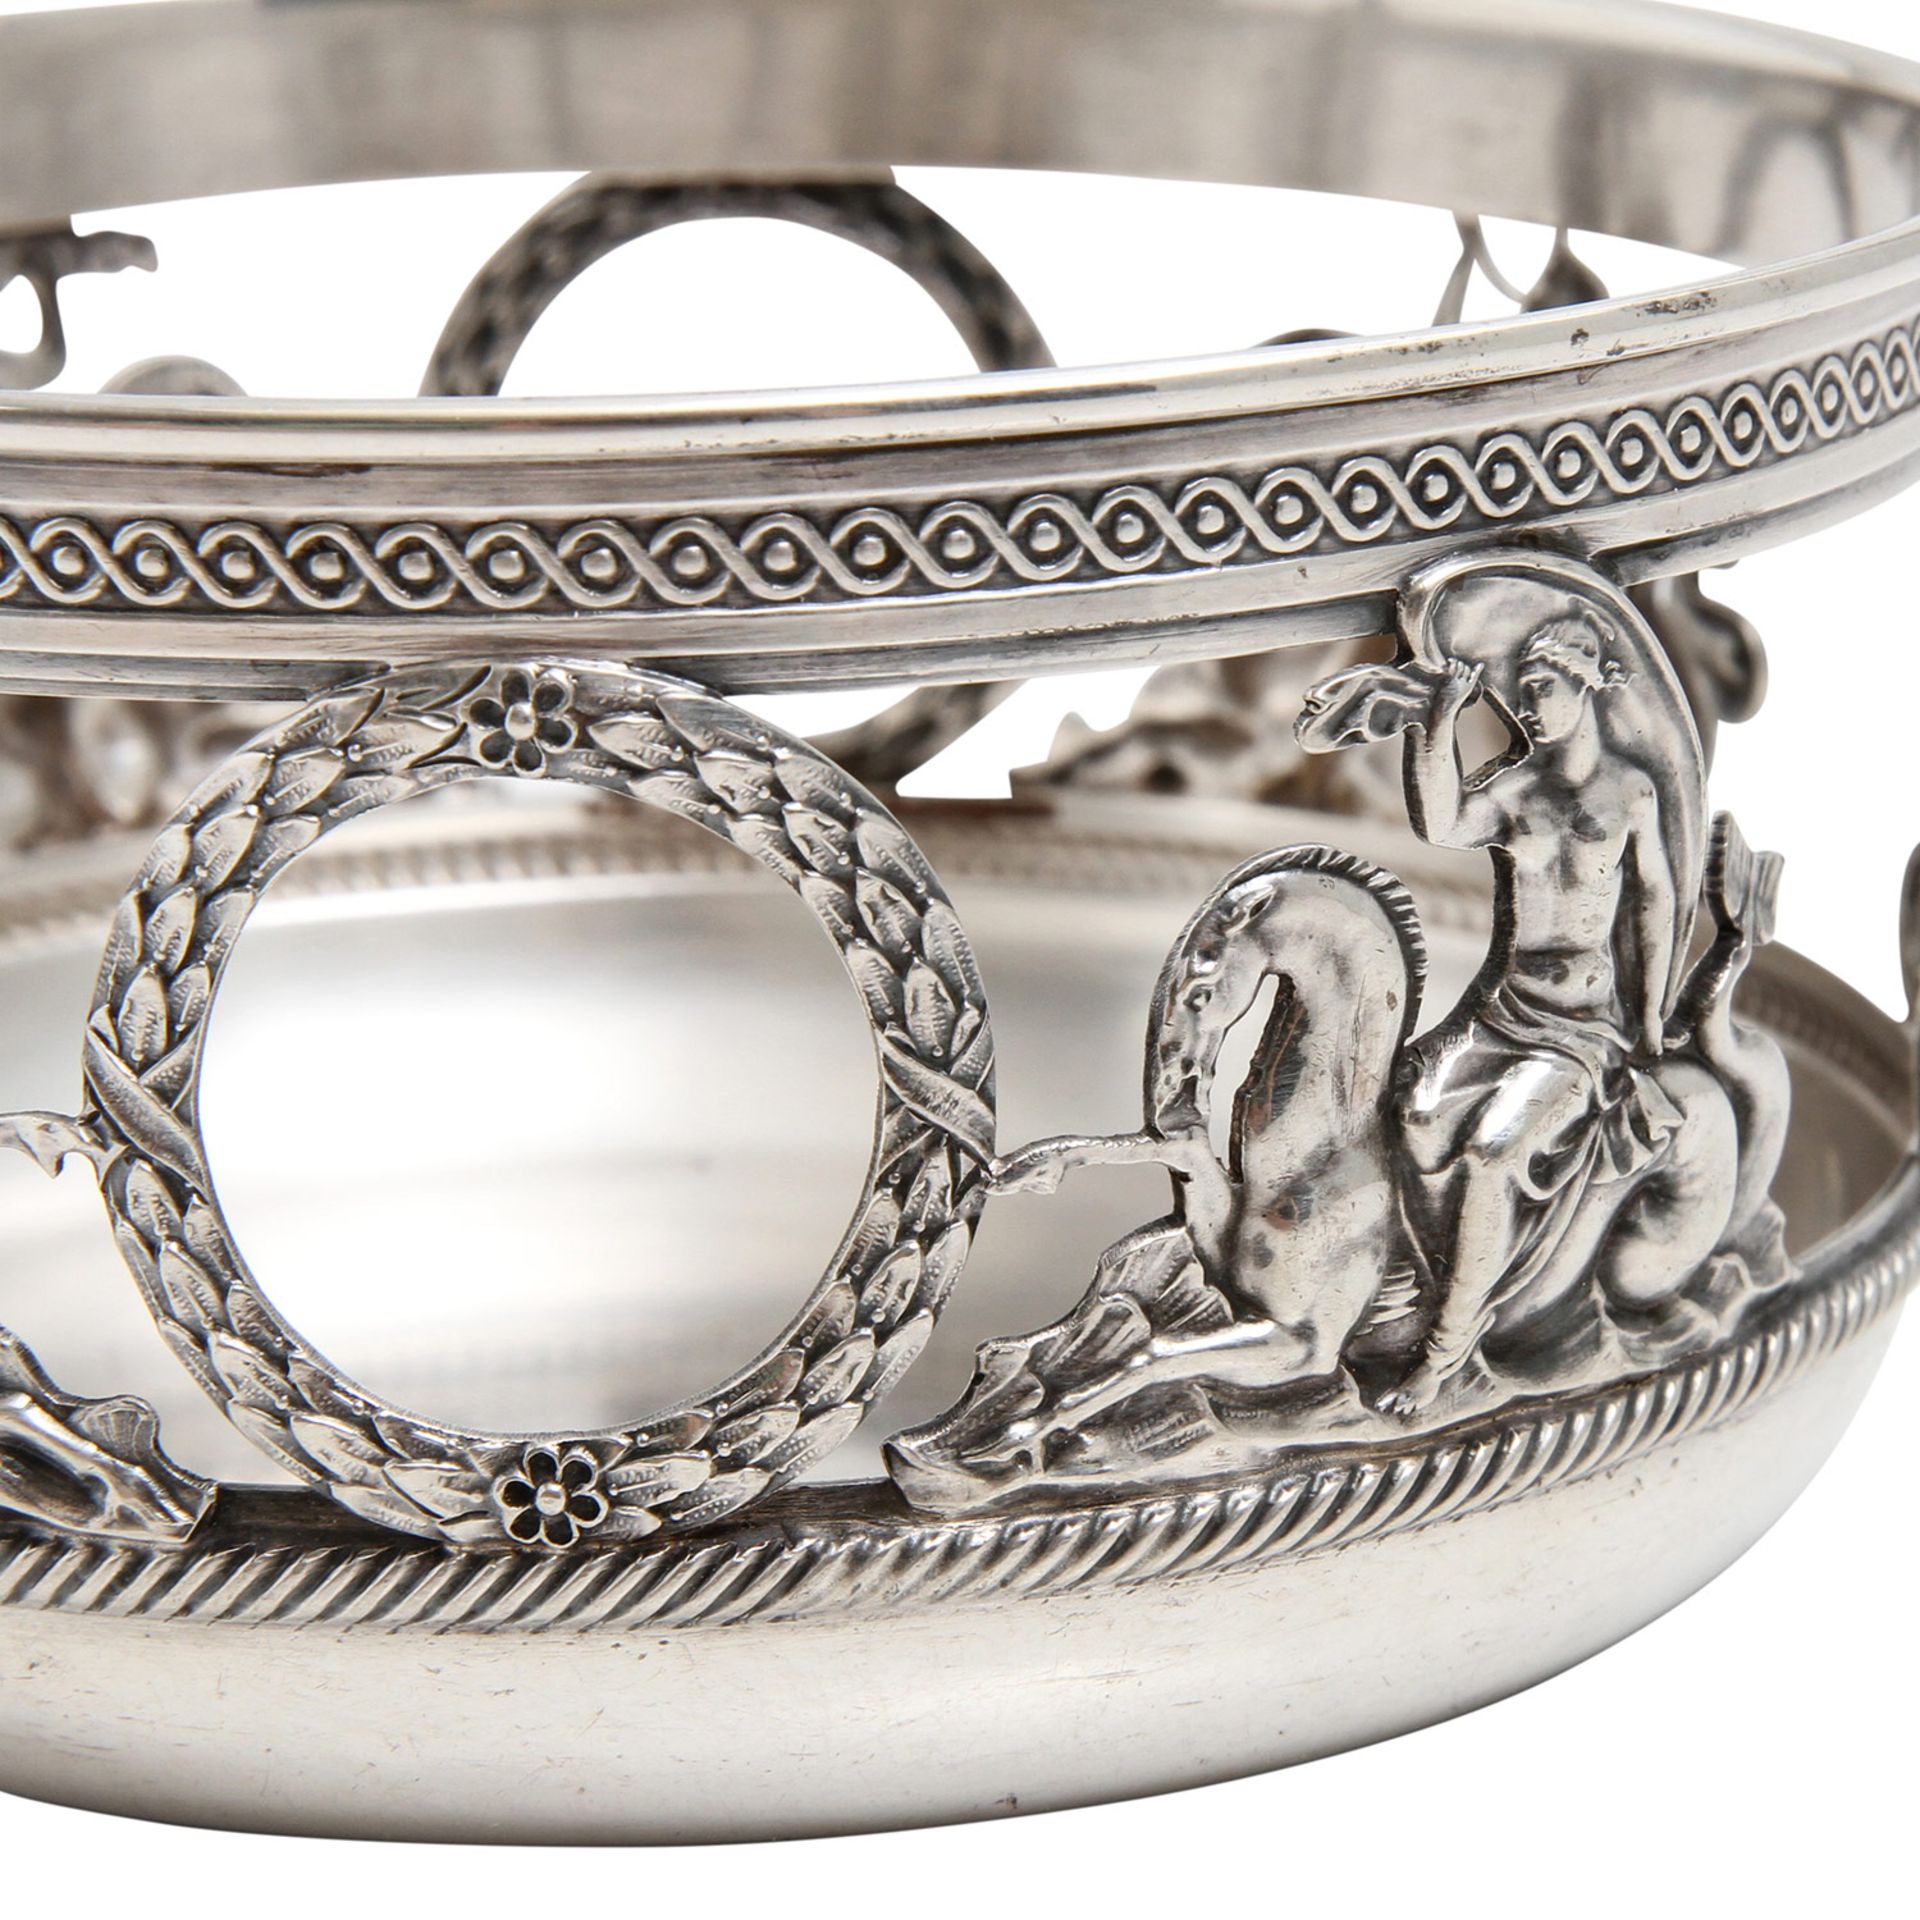 BRUCKMANN Henkelkörbchen 800 Silber, Ende 19. Jhd. Runde Form, durchbrochen gearbeitete Wandung - Image 4 of 6